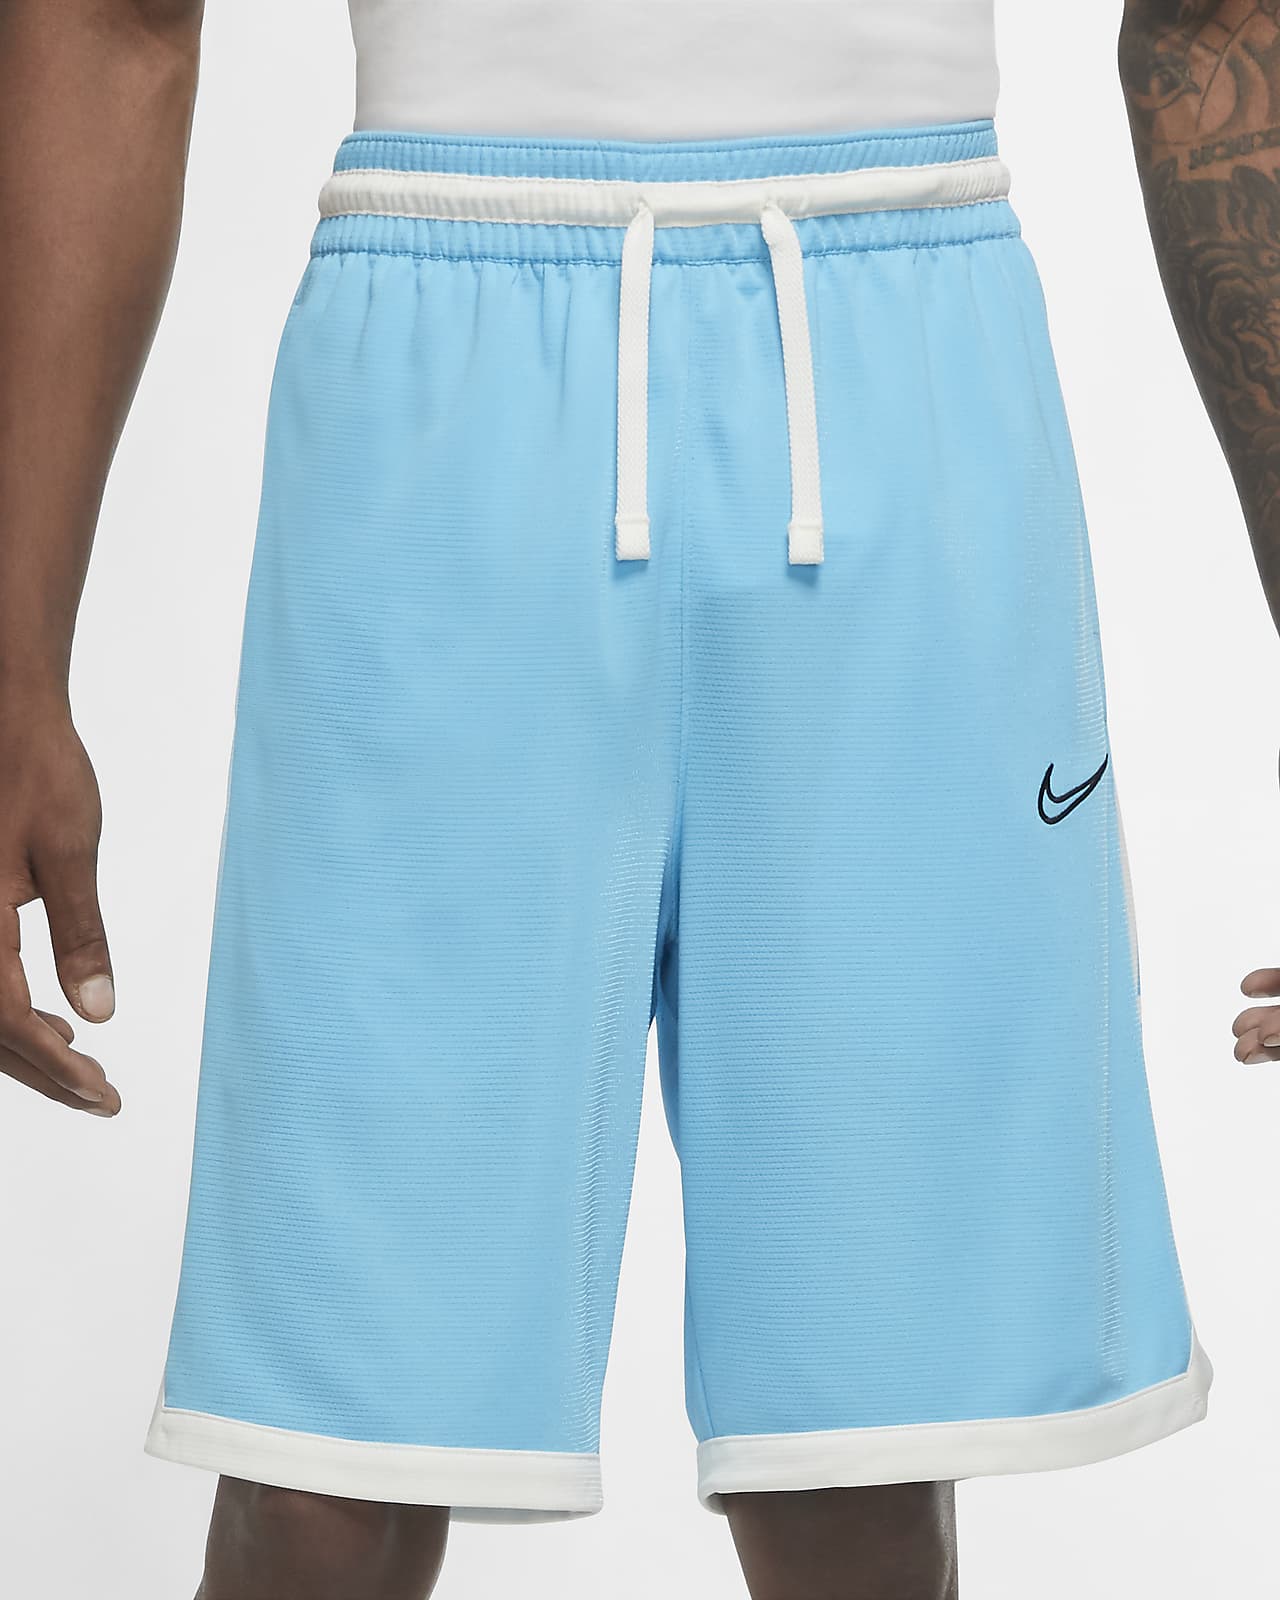 blue nike basketball shorts